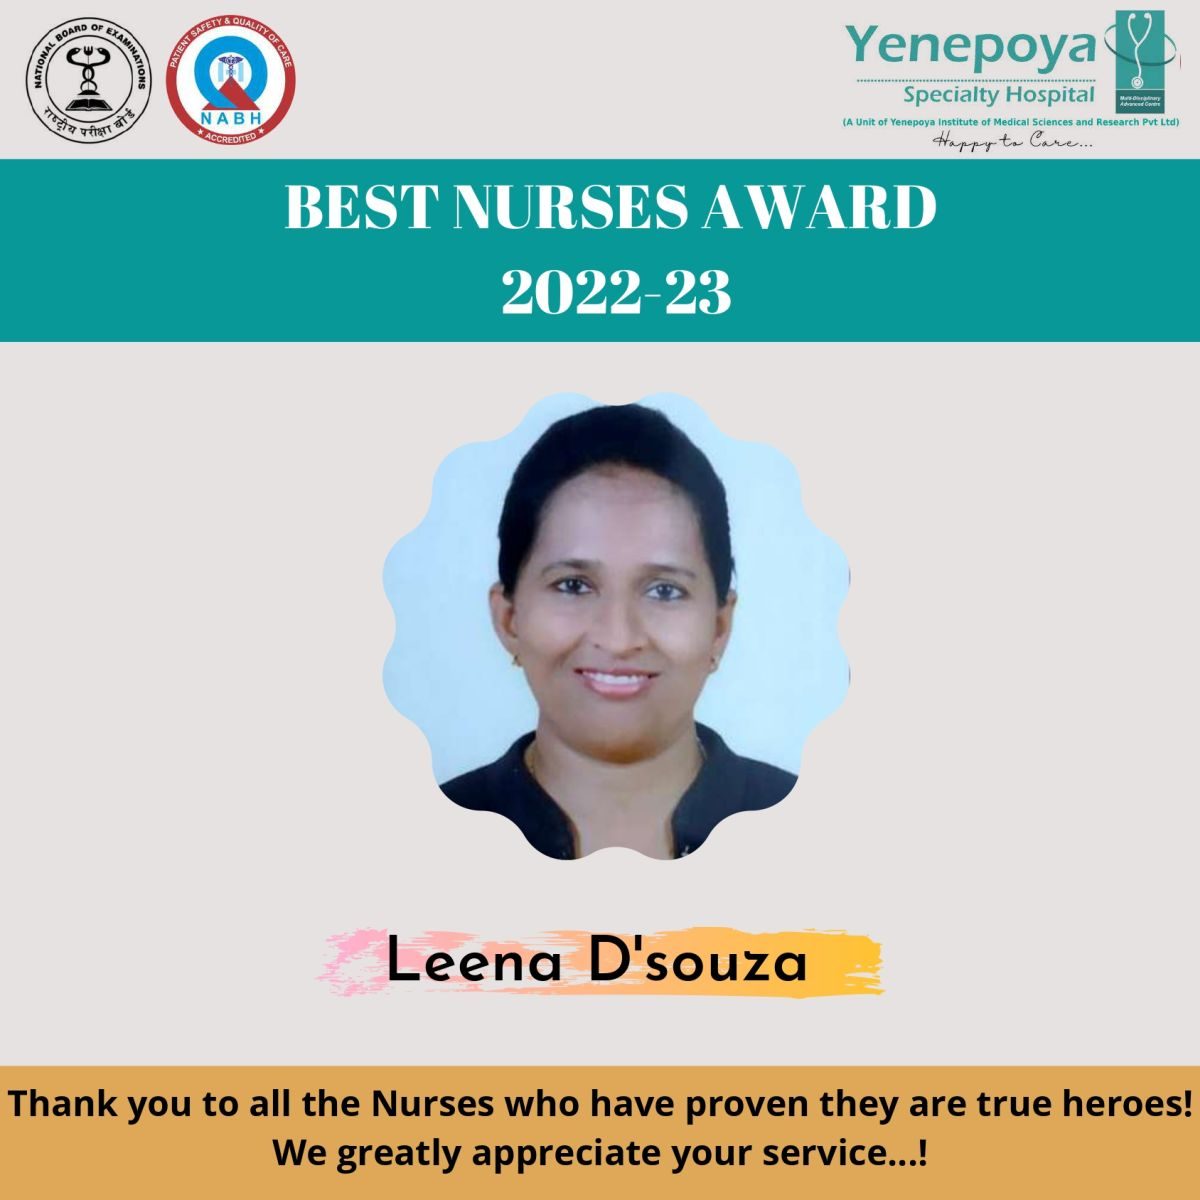 Best Nurses Award - 2022-23